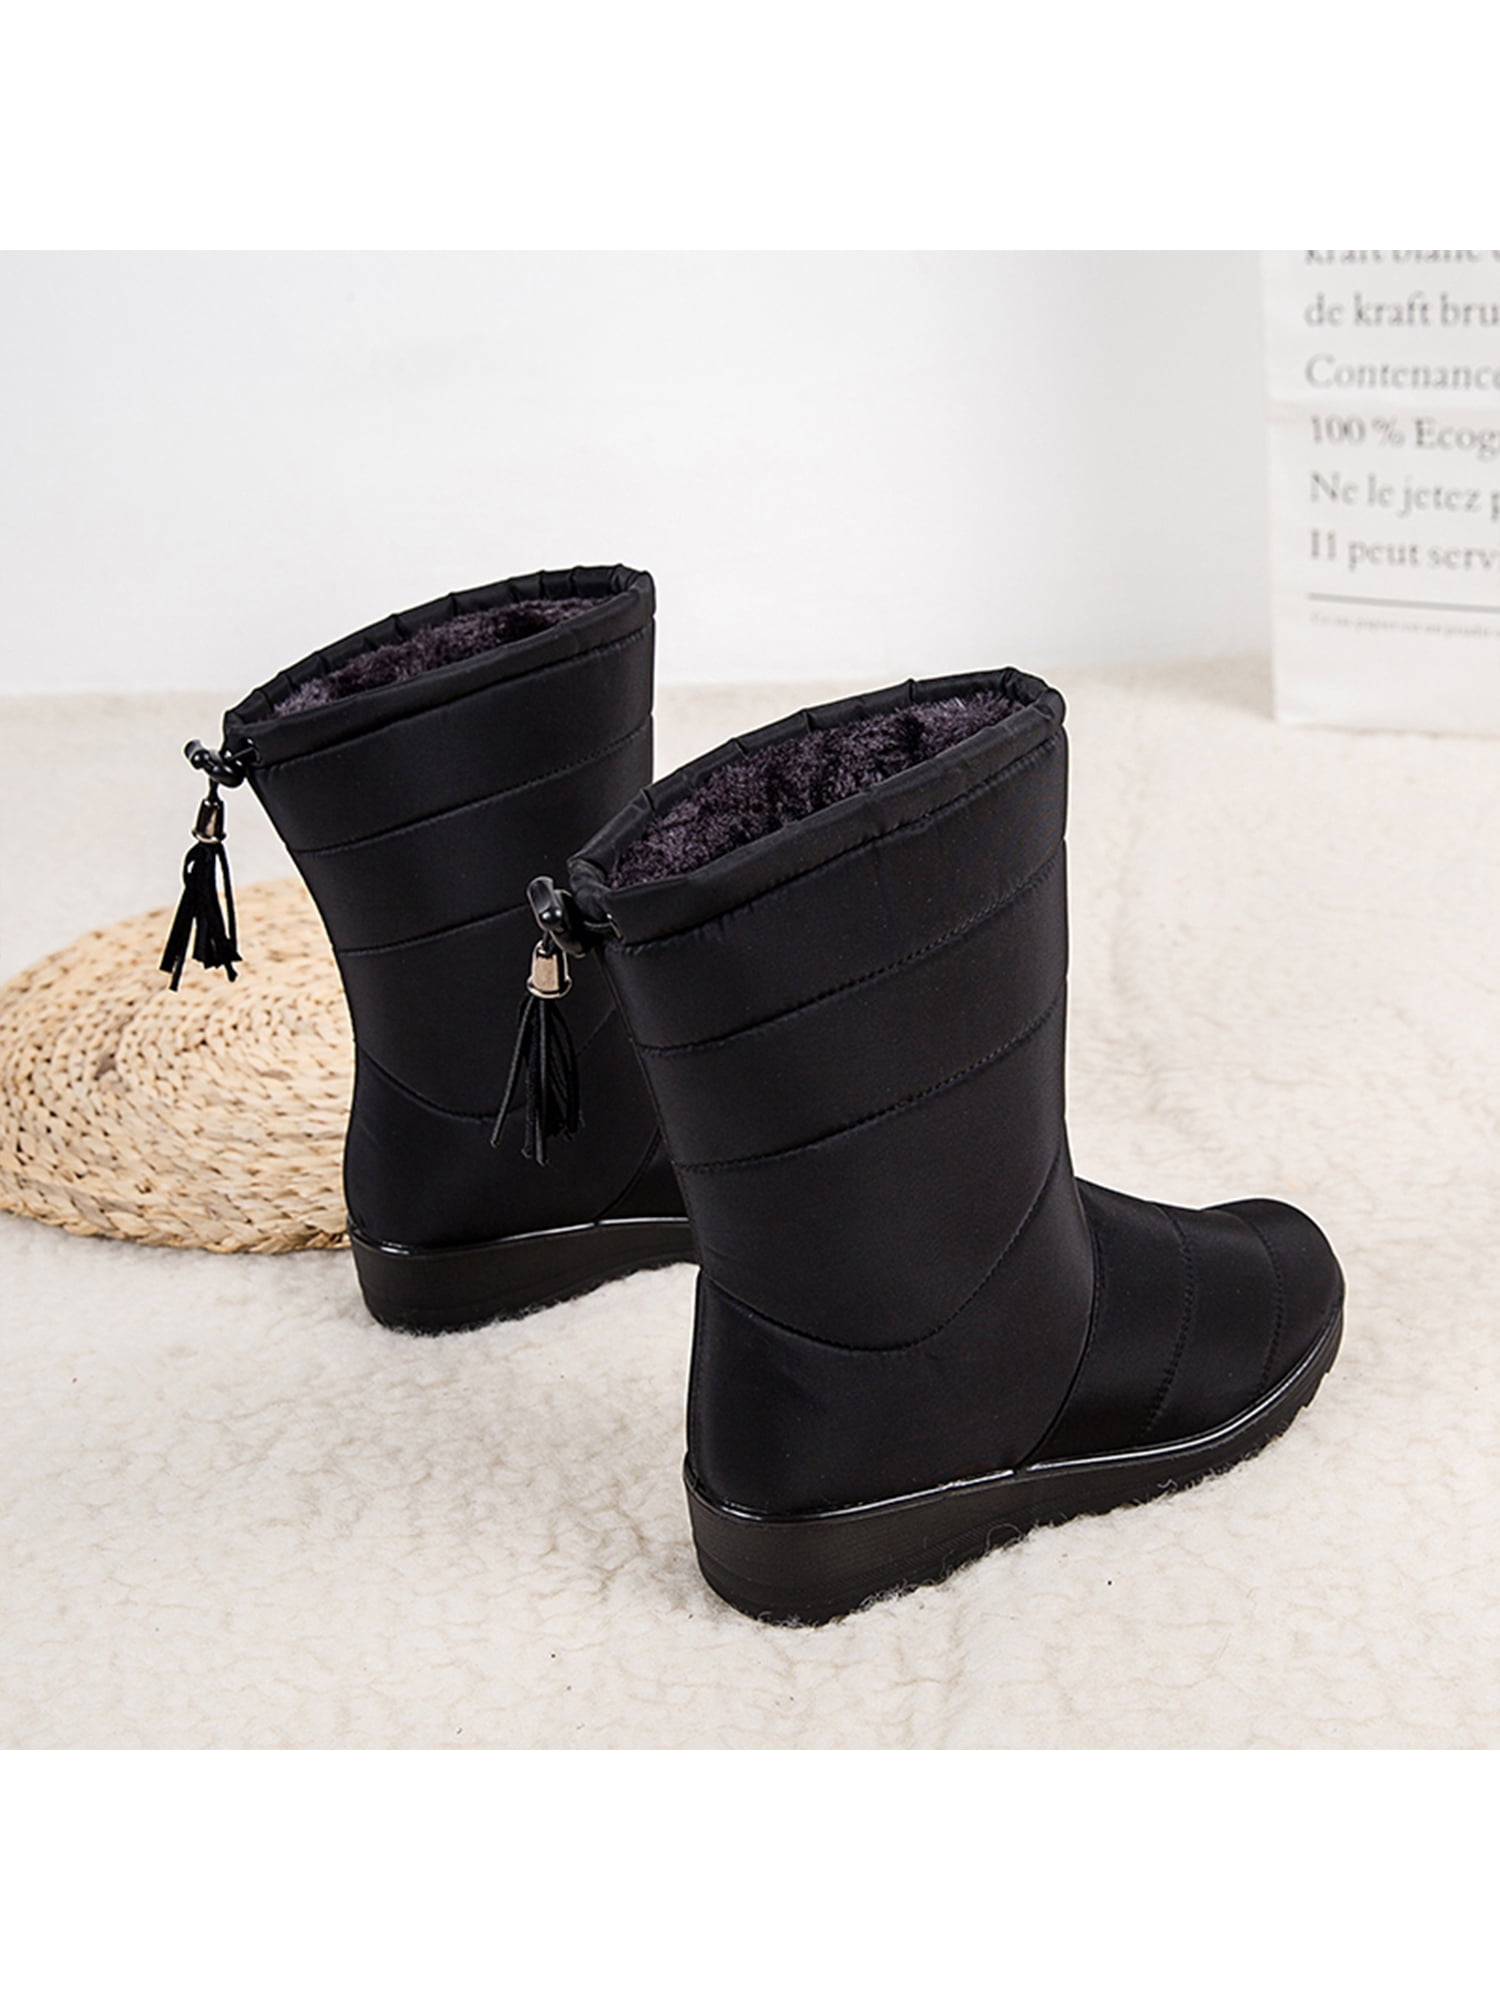 wedge snow boots waterproof